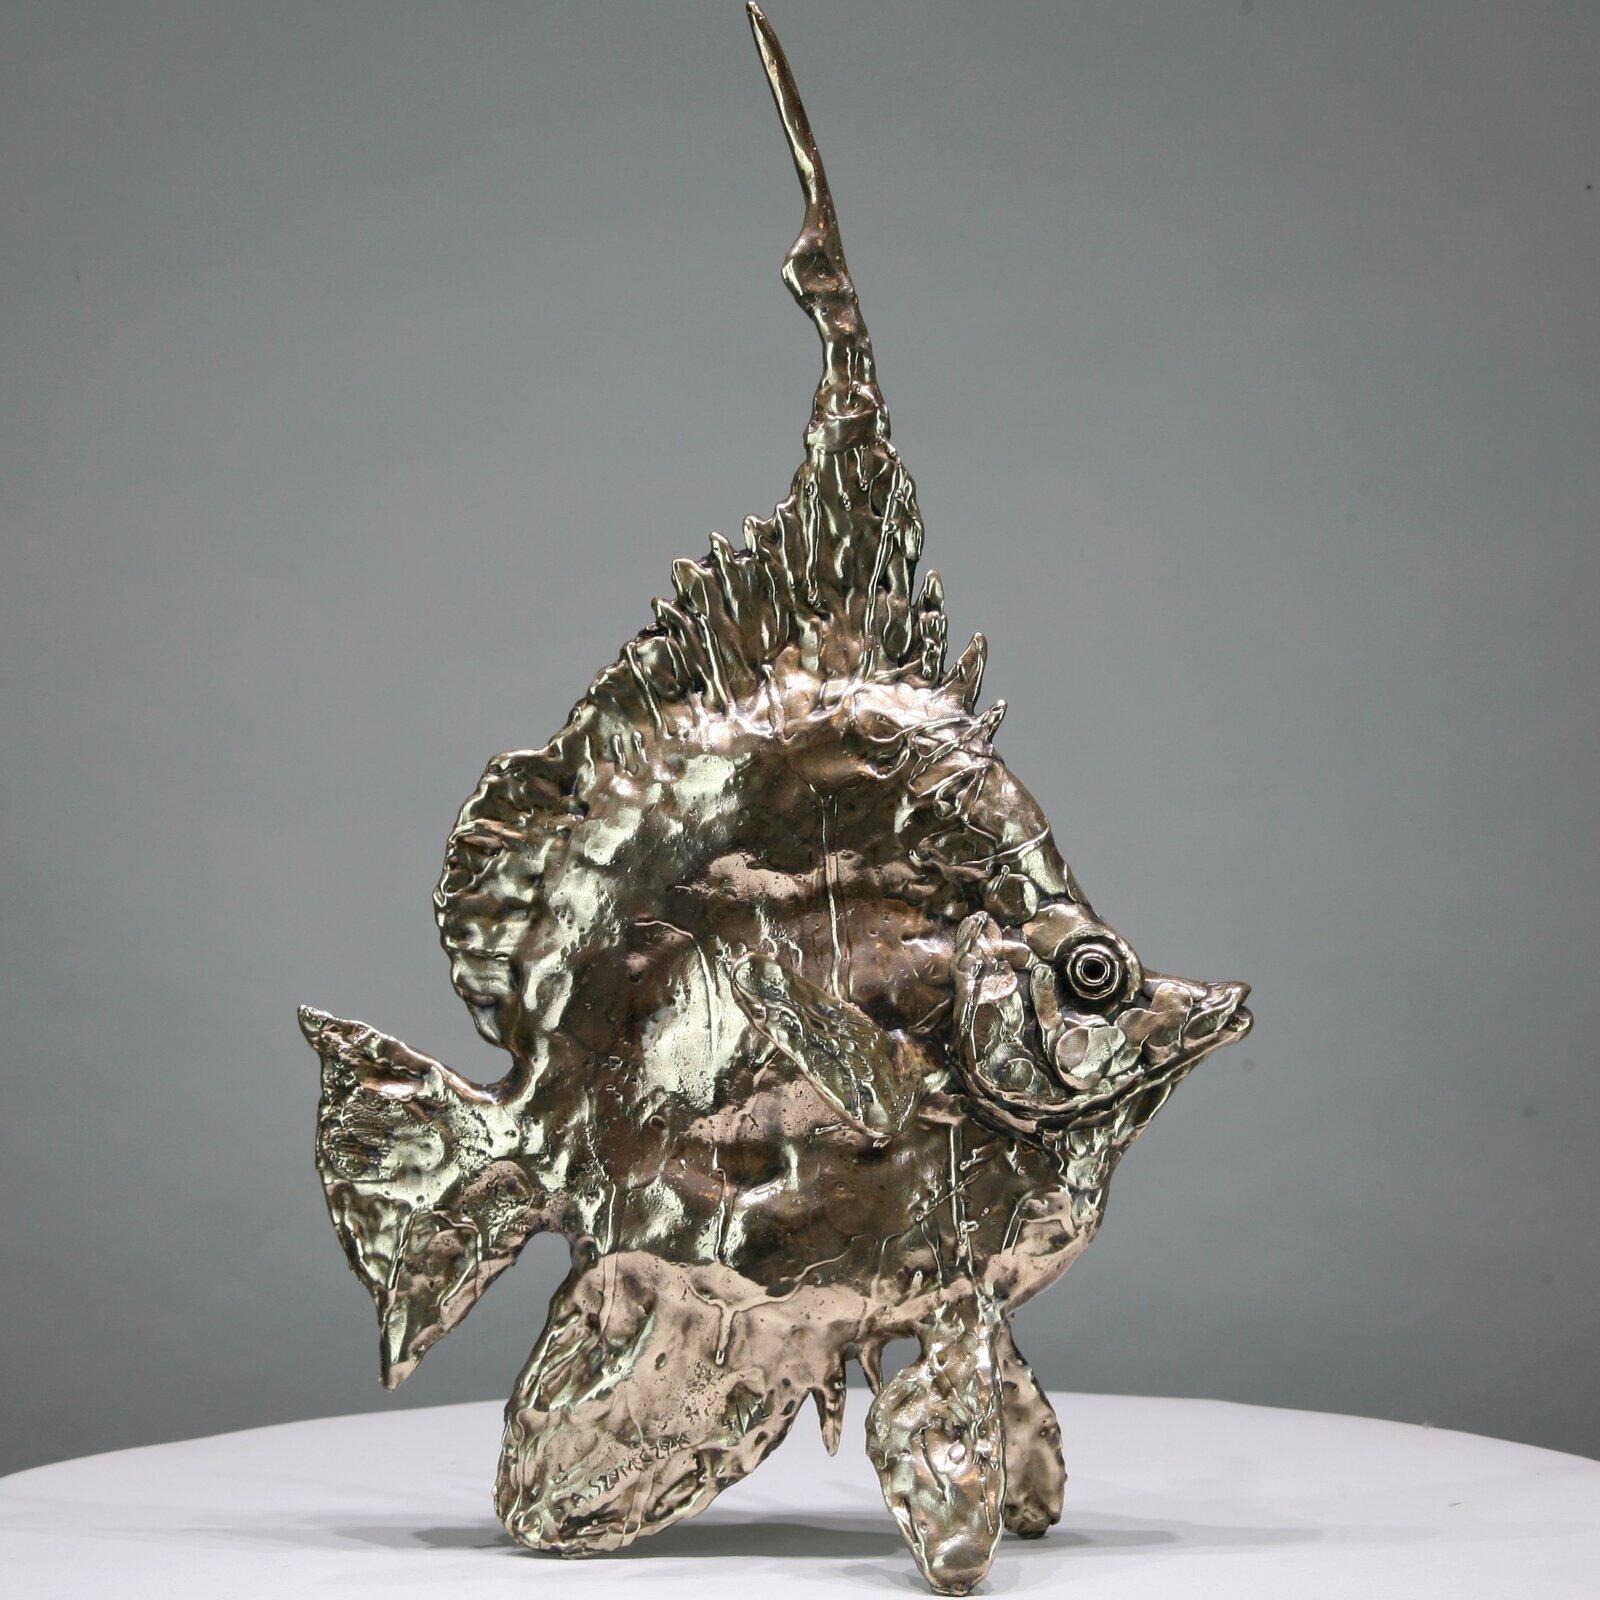 Sea Angel Fish-original bronze wildlife sculpture-artwork-contemporary Art - Abstract Impressionist Sculpture by Andrzej Szymczyk